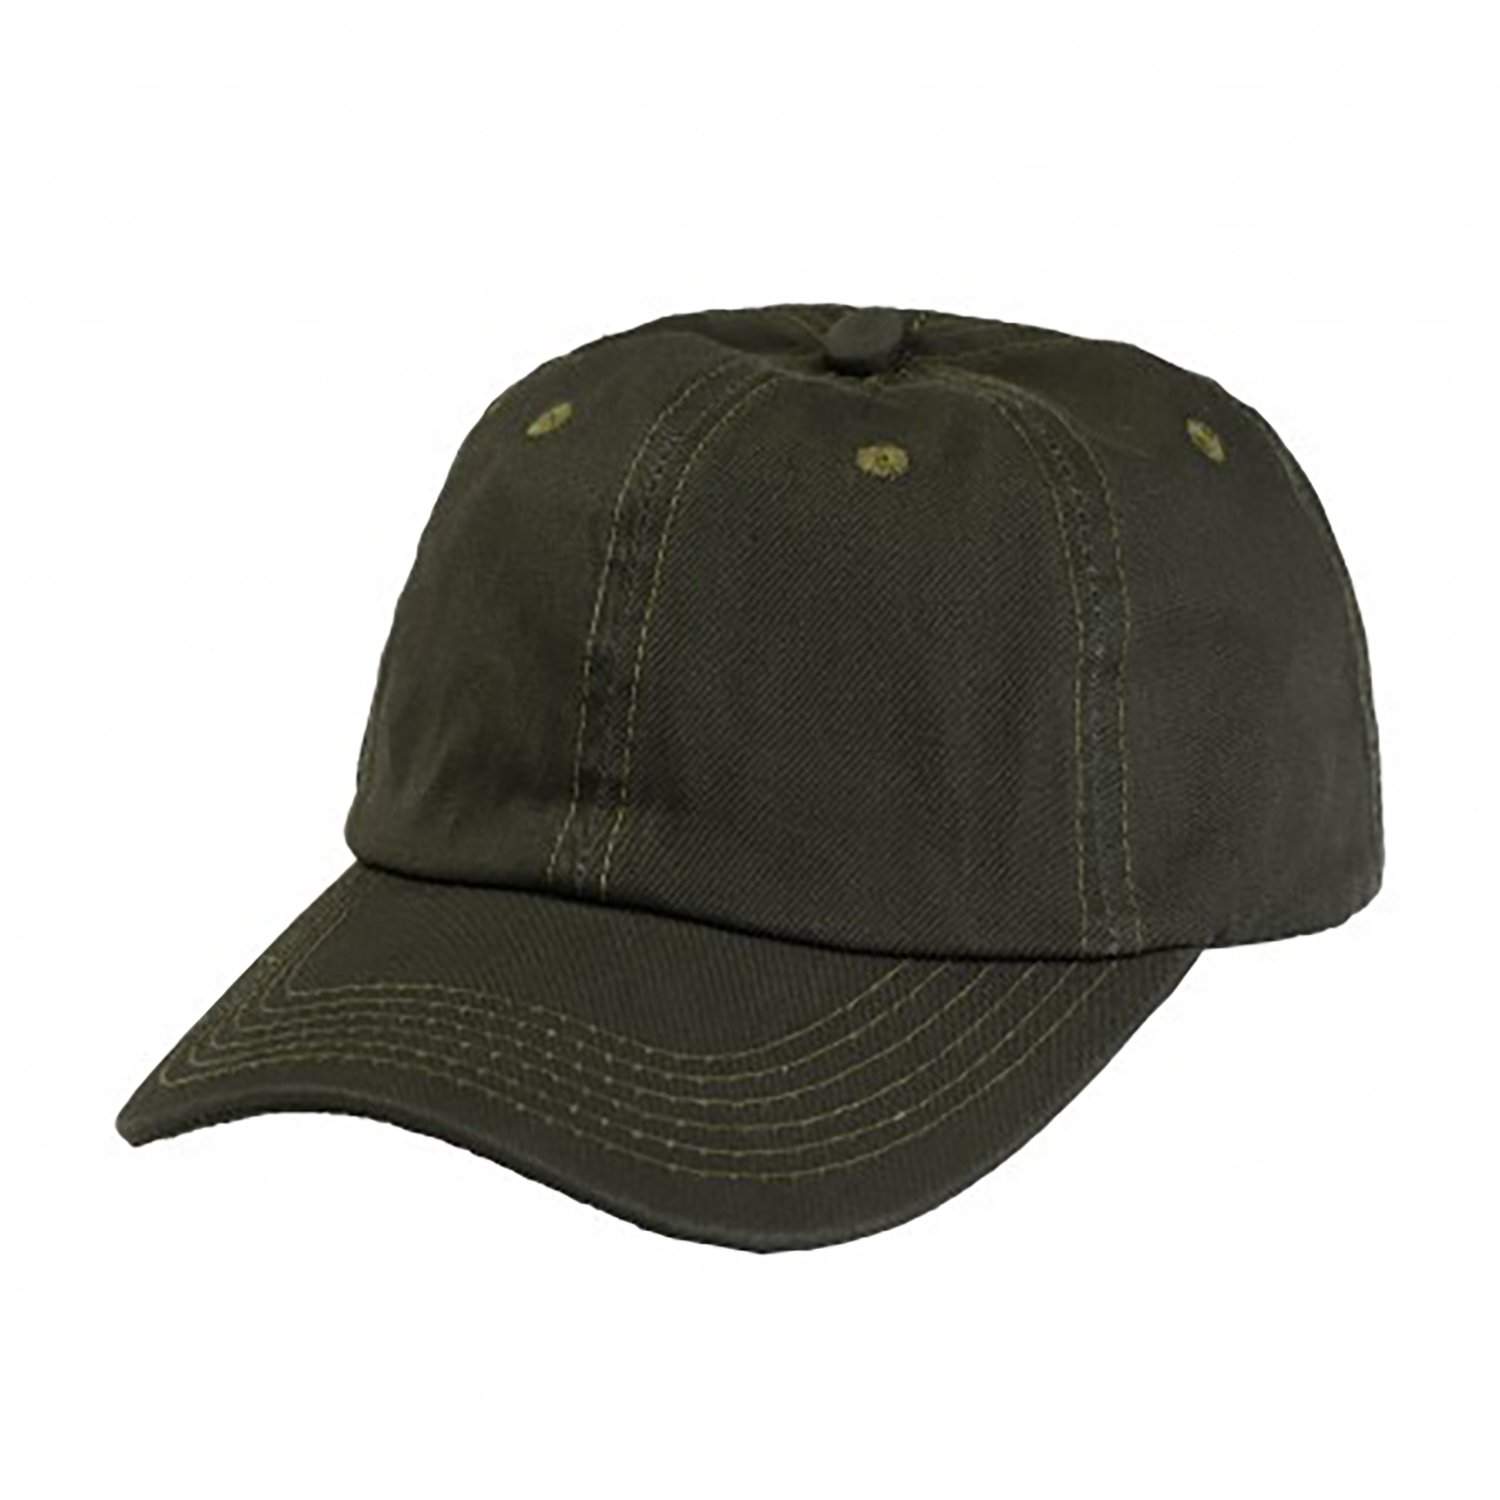 Mechaly Cotton Dad Hat Adjustable Cap